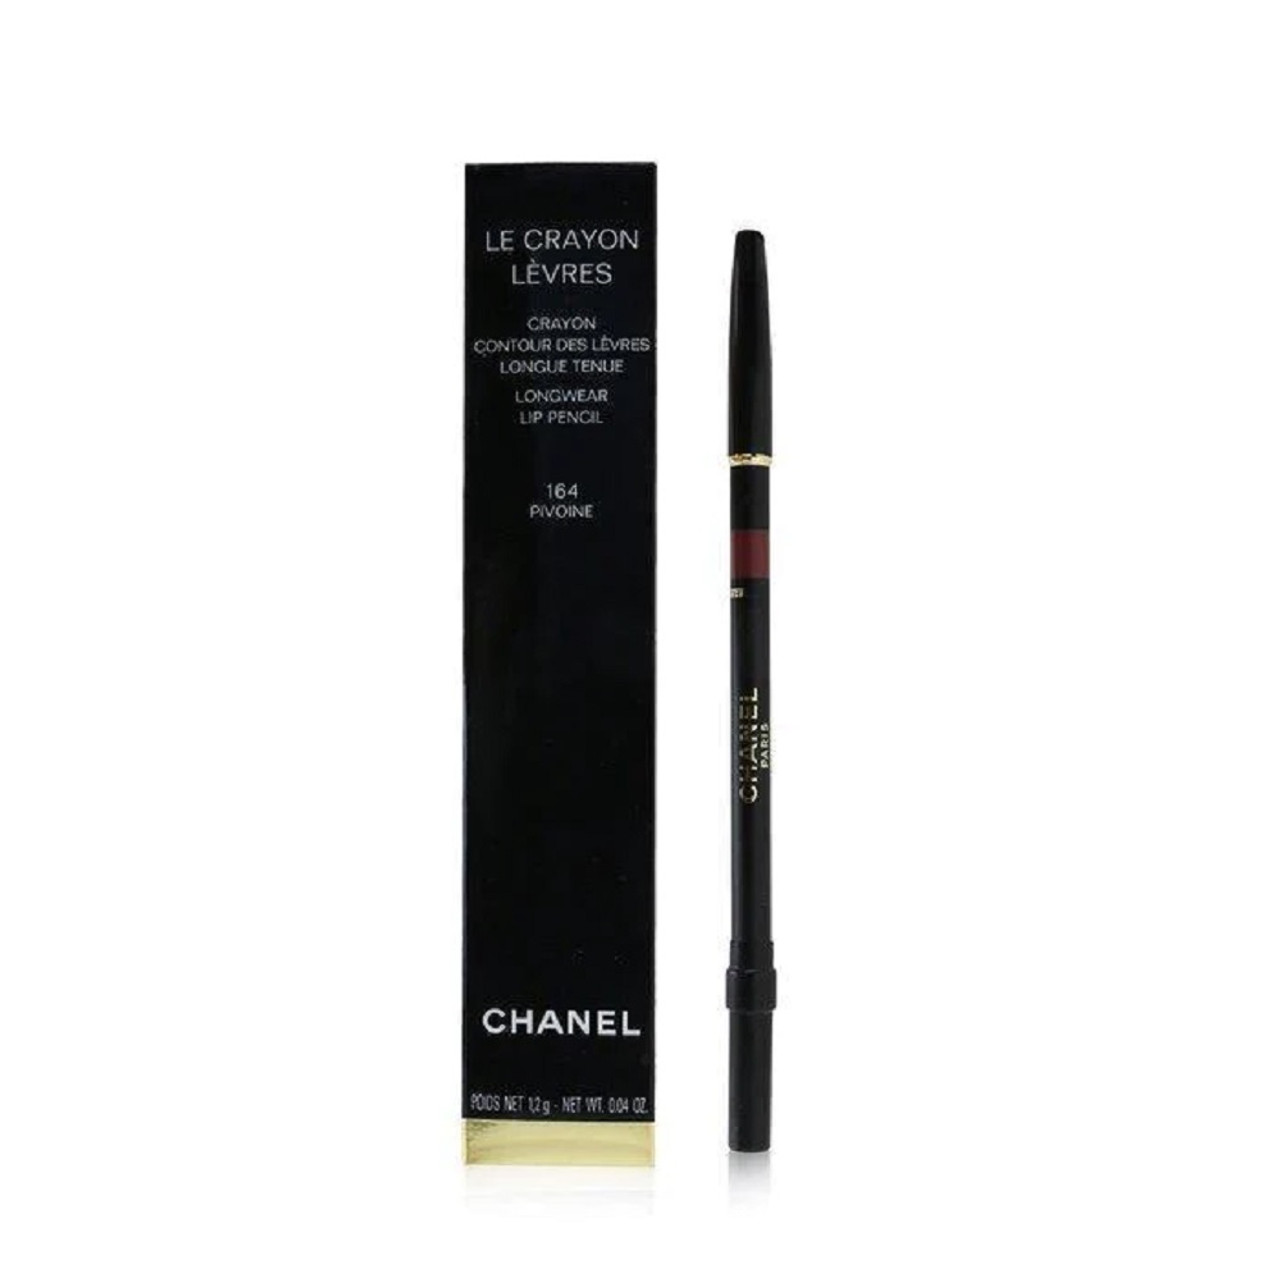 Chanel Le Crayon Lèvres precise lip pencil with sharpener shade 164 -  Pivoine 1,2 g